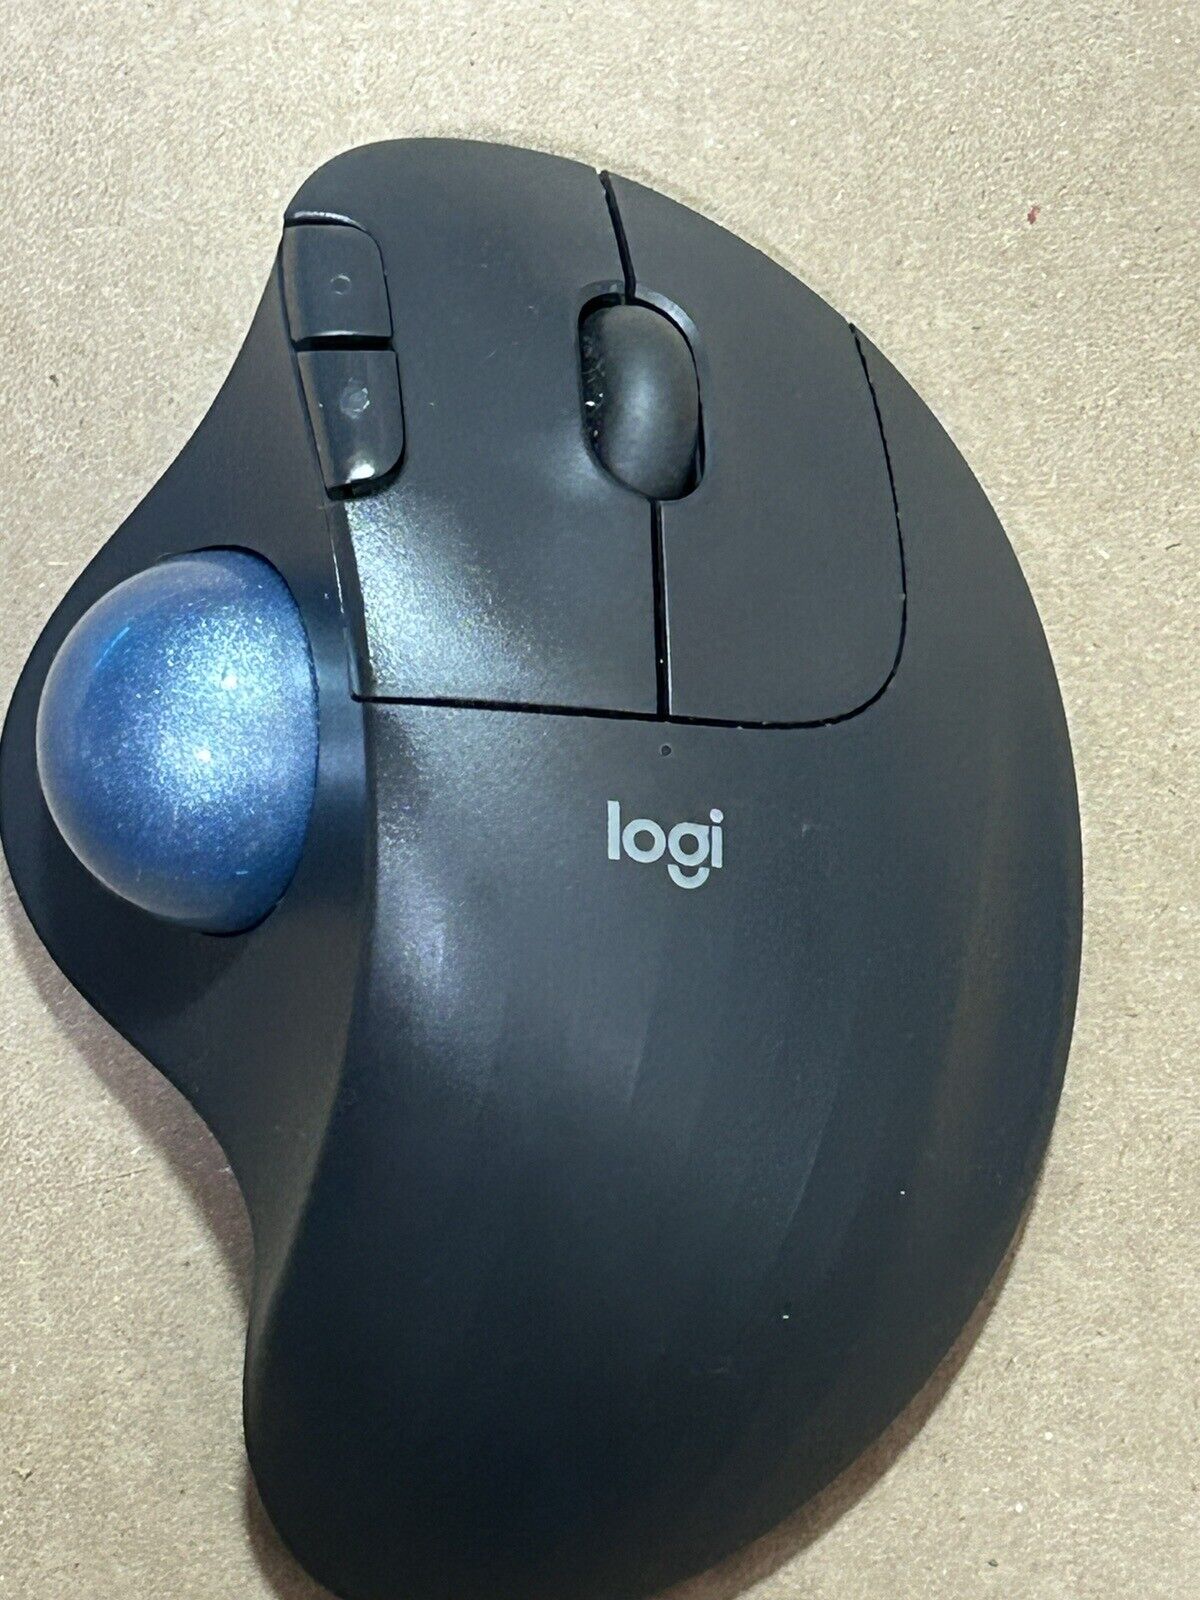 Logitech ERGO M575 Wireless Trackball Mouse Black Receiver Incl. 5 Buttons Tests